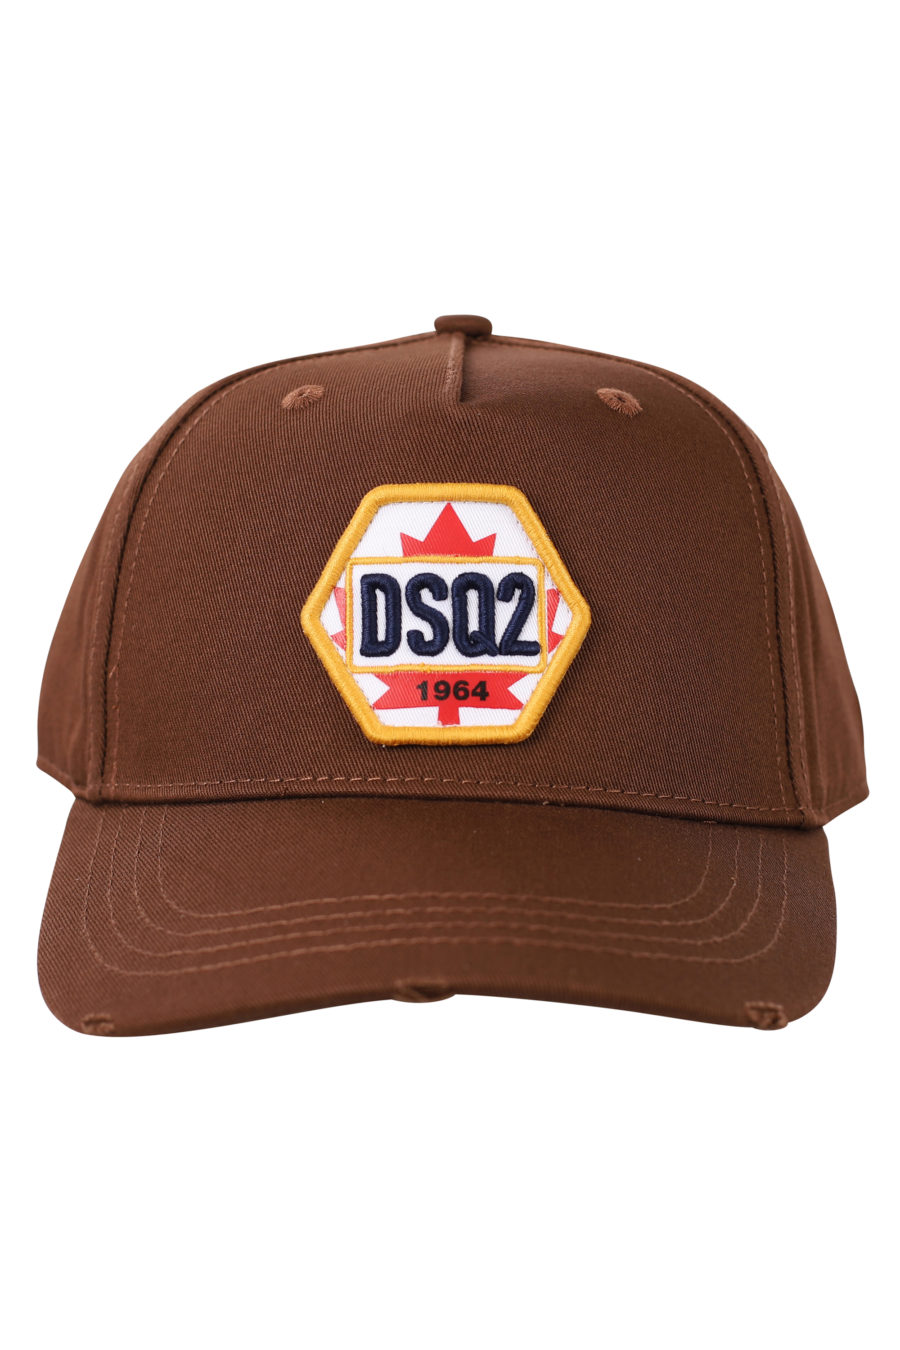 Gorra marrón ajustable con parche "dsq2" amarillo - IMG 0471